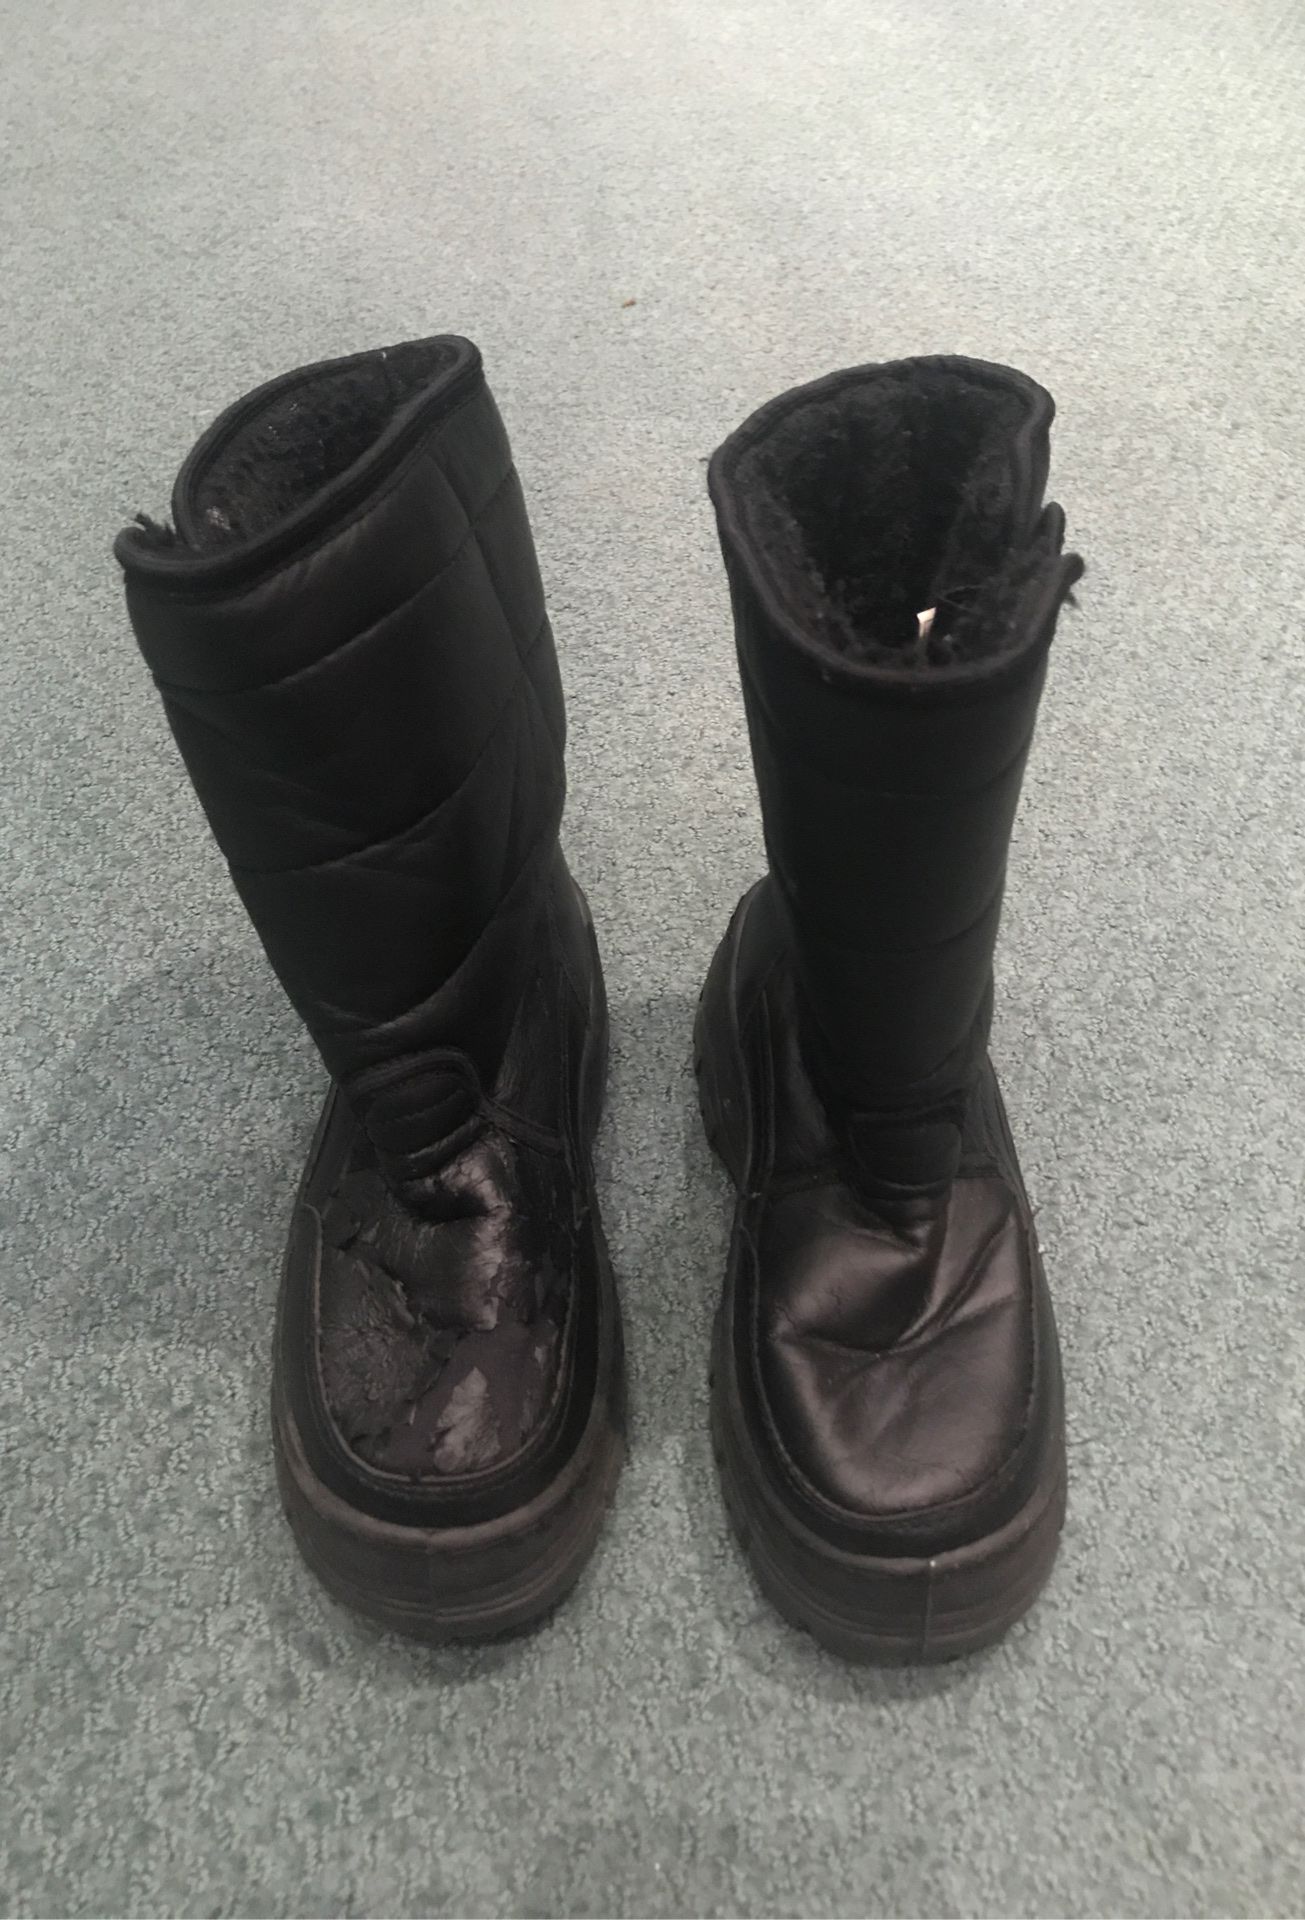 Kids Black WFS Rain & Snow Boots In Size 2